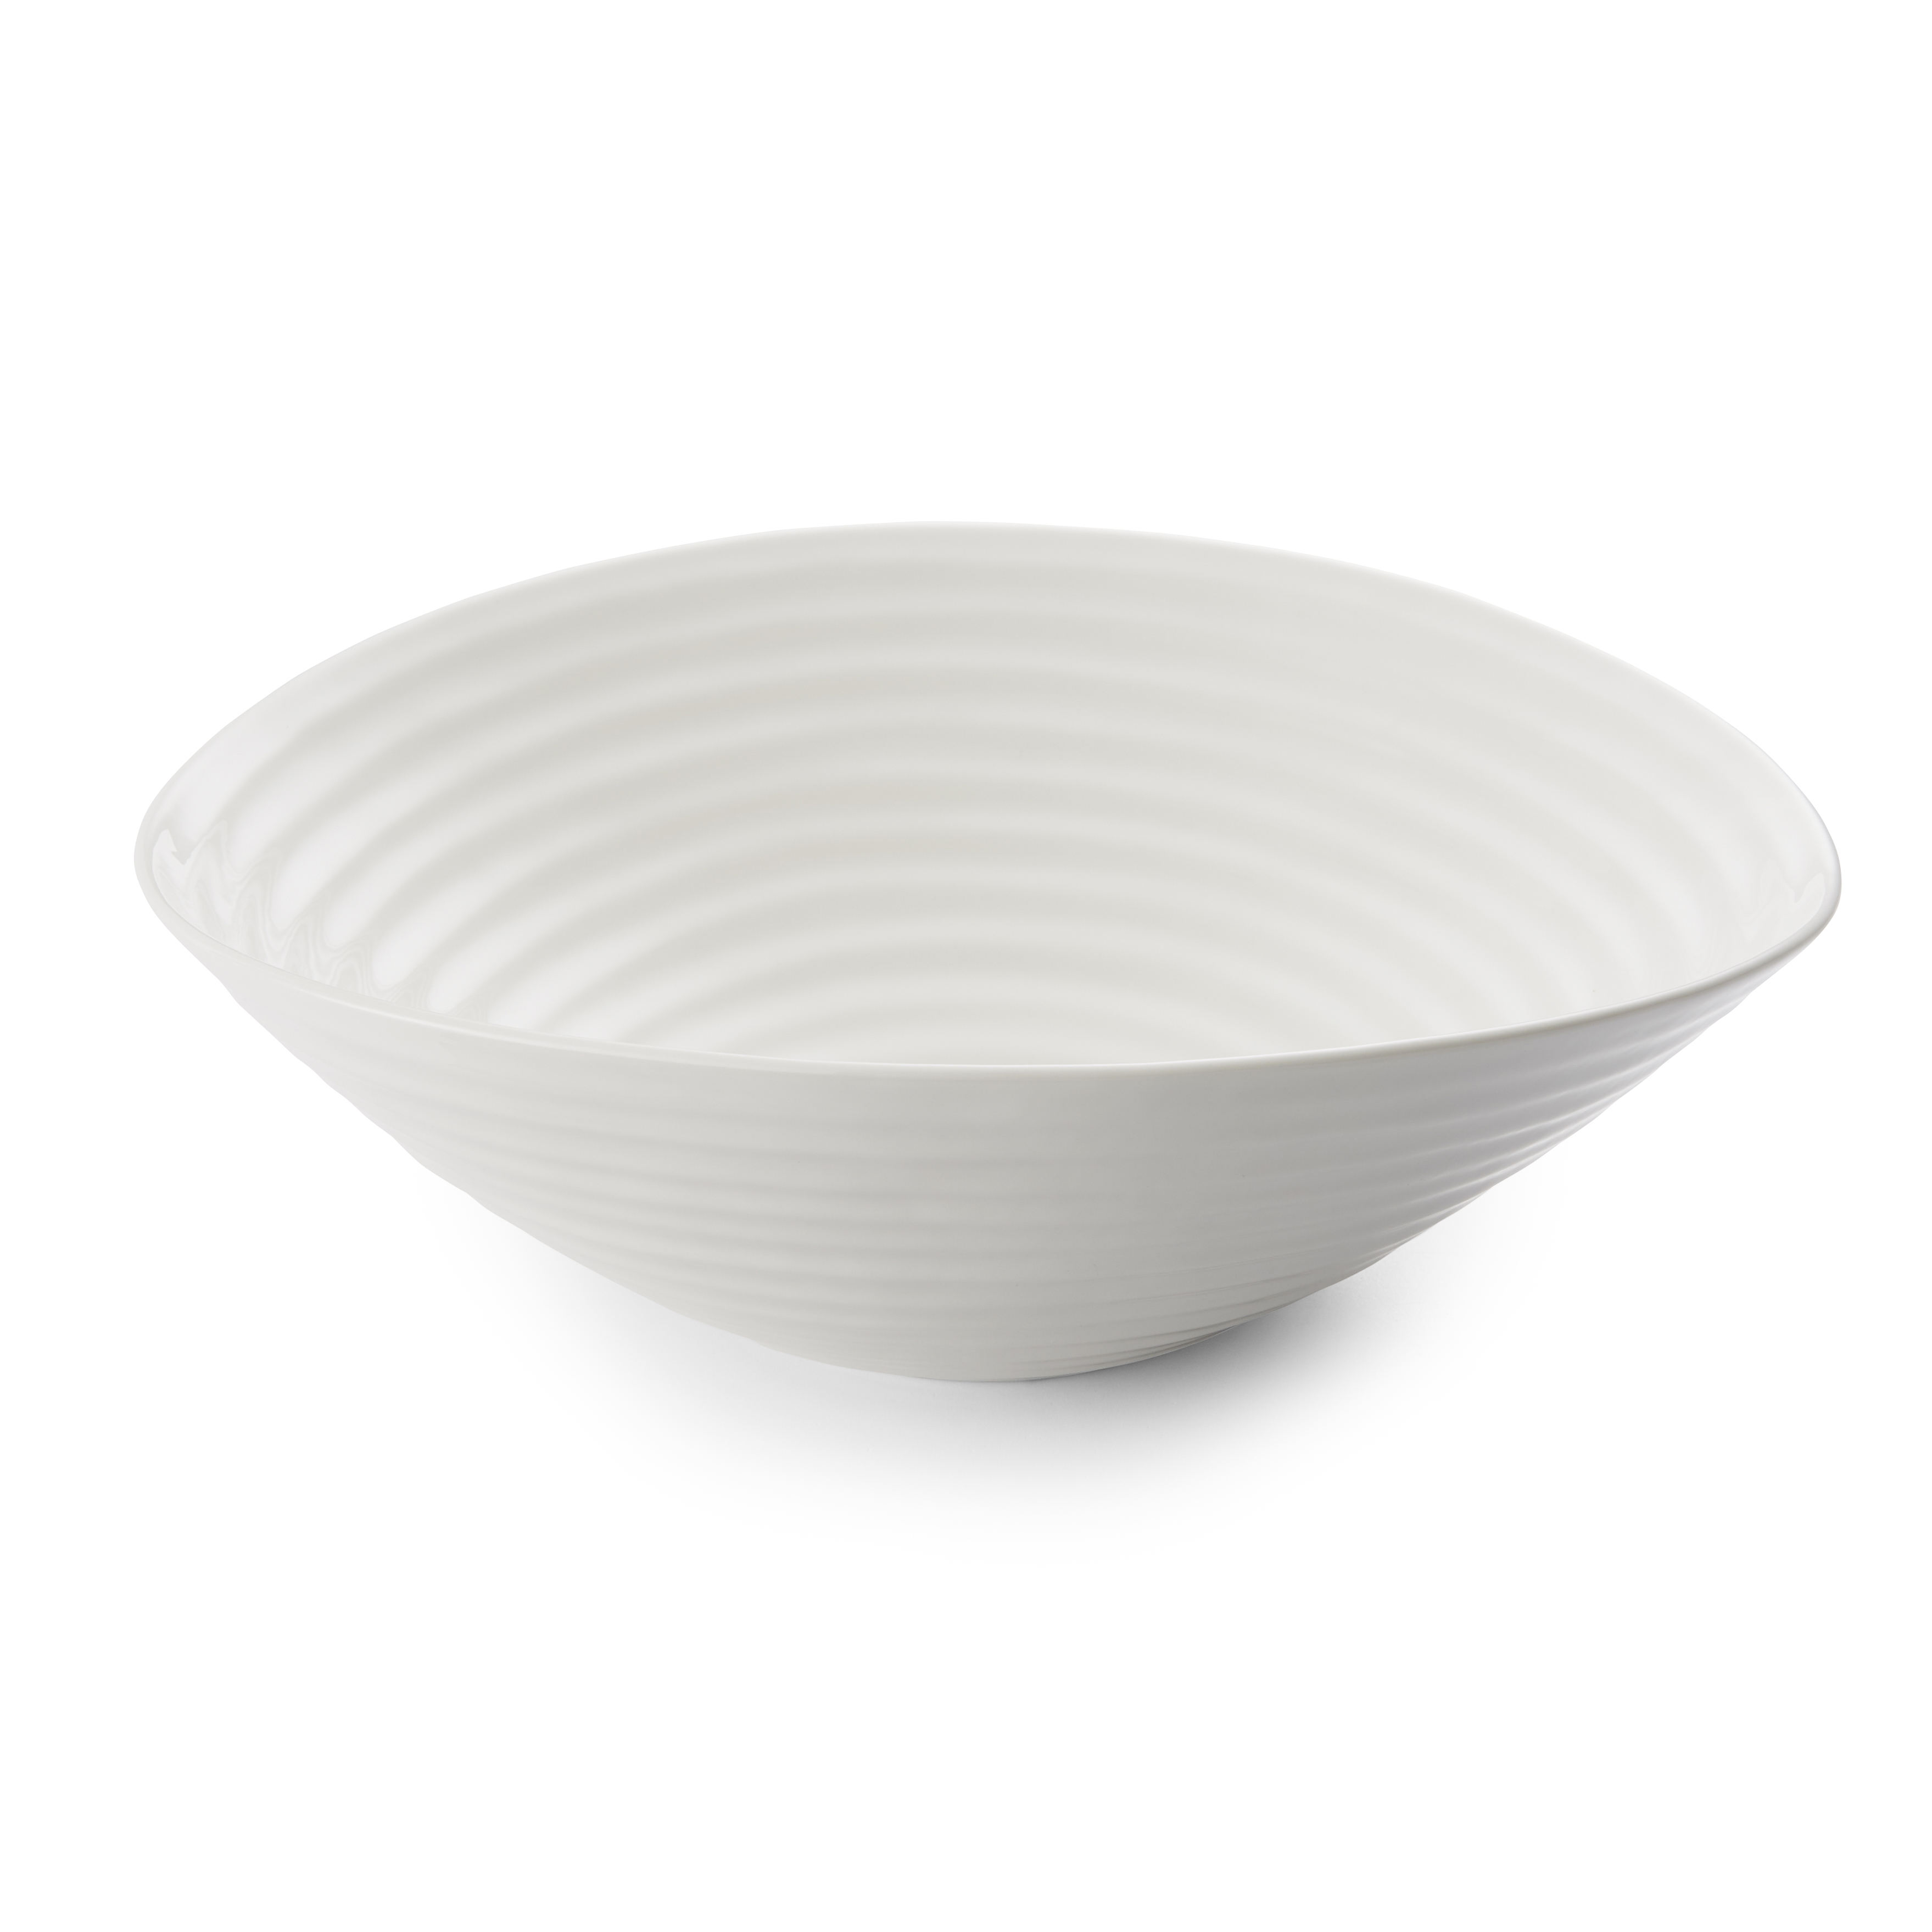 White Bowls,white salad bowls,large white salad bowls image number null